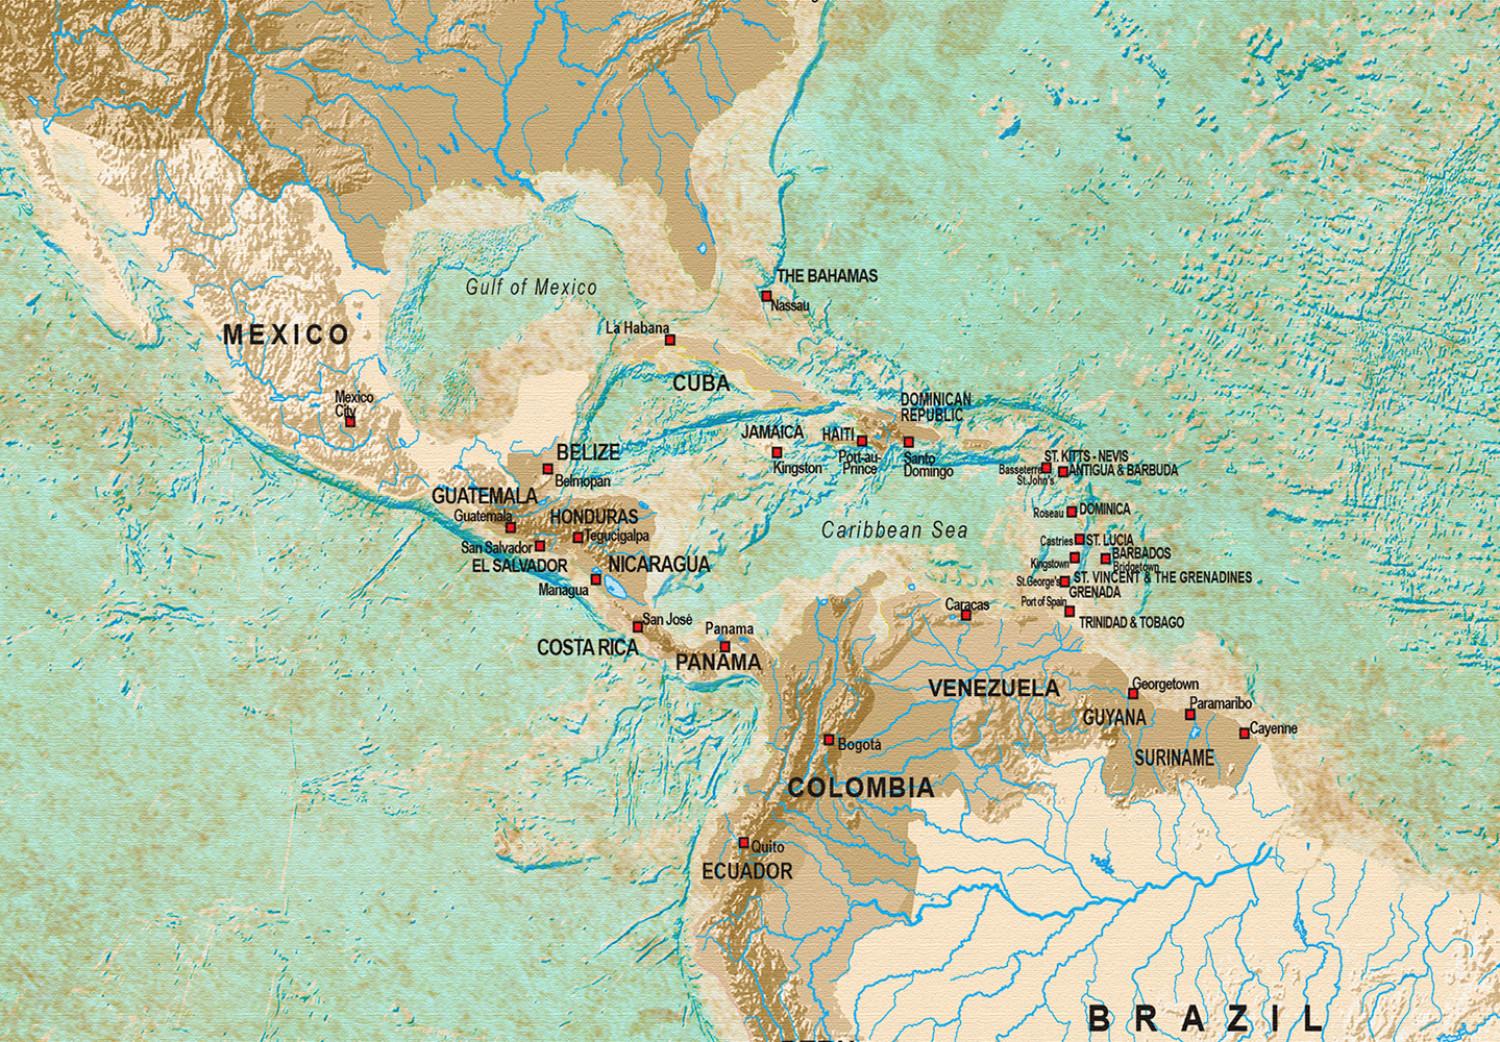 Cuadro moderno Descubriendo continentes verdes (1 parte) - mapa mundial en beige